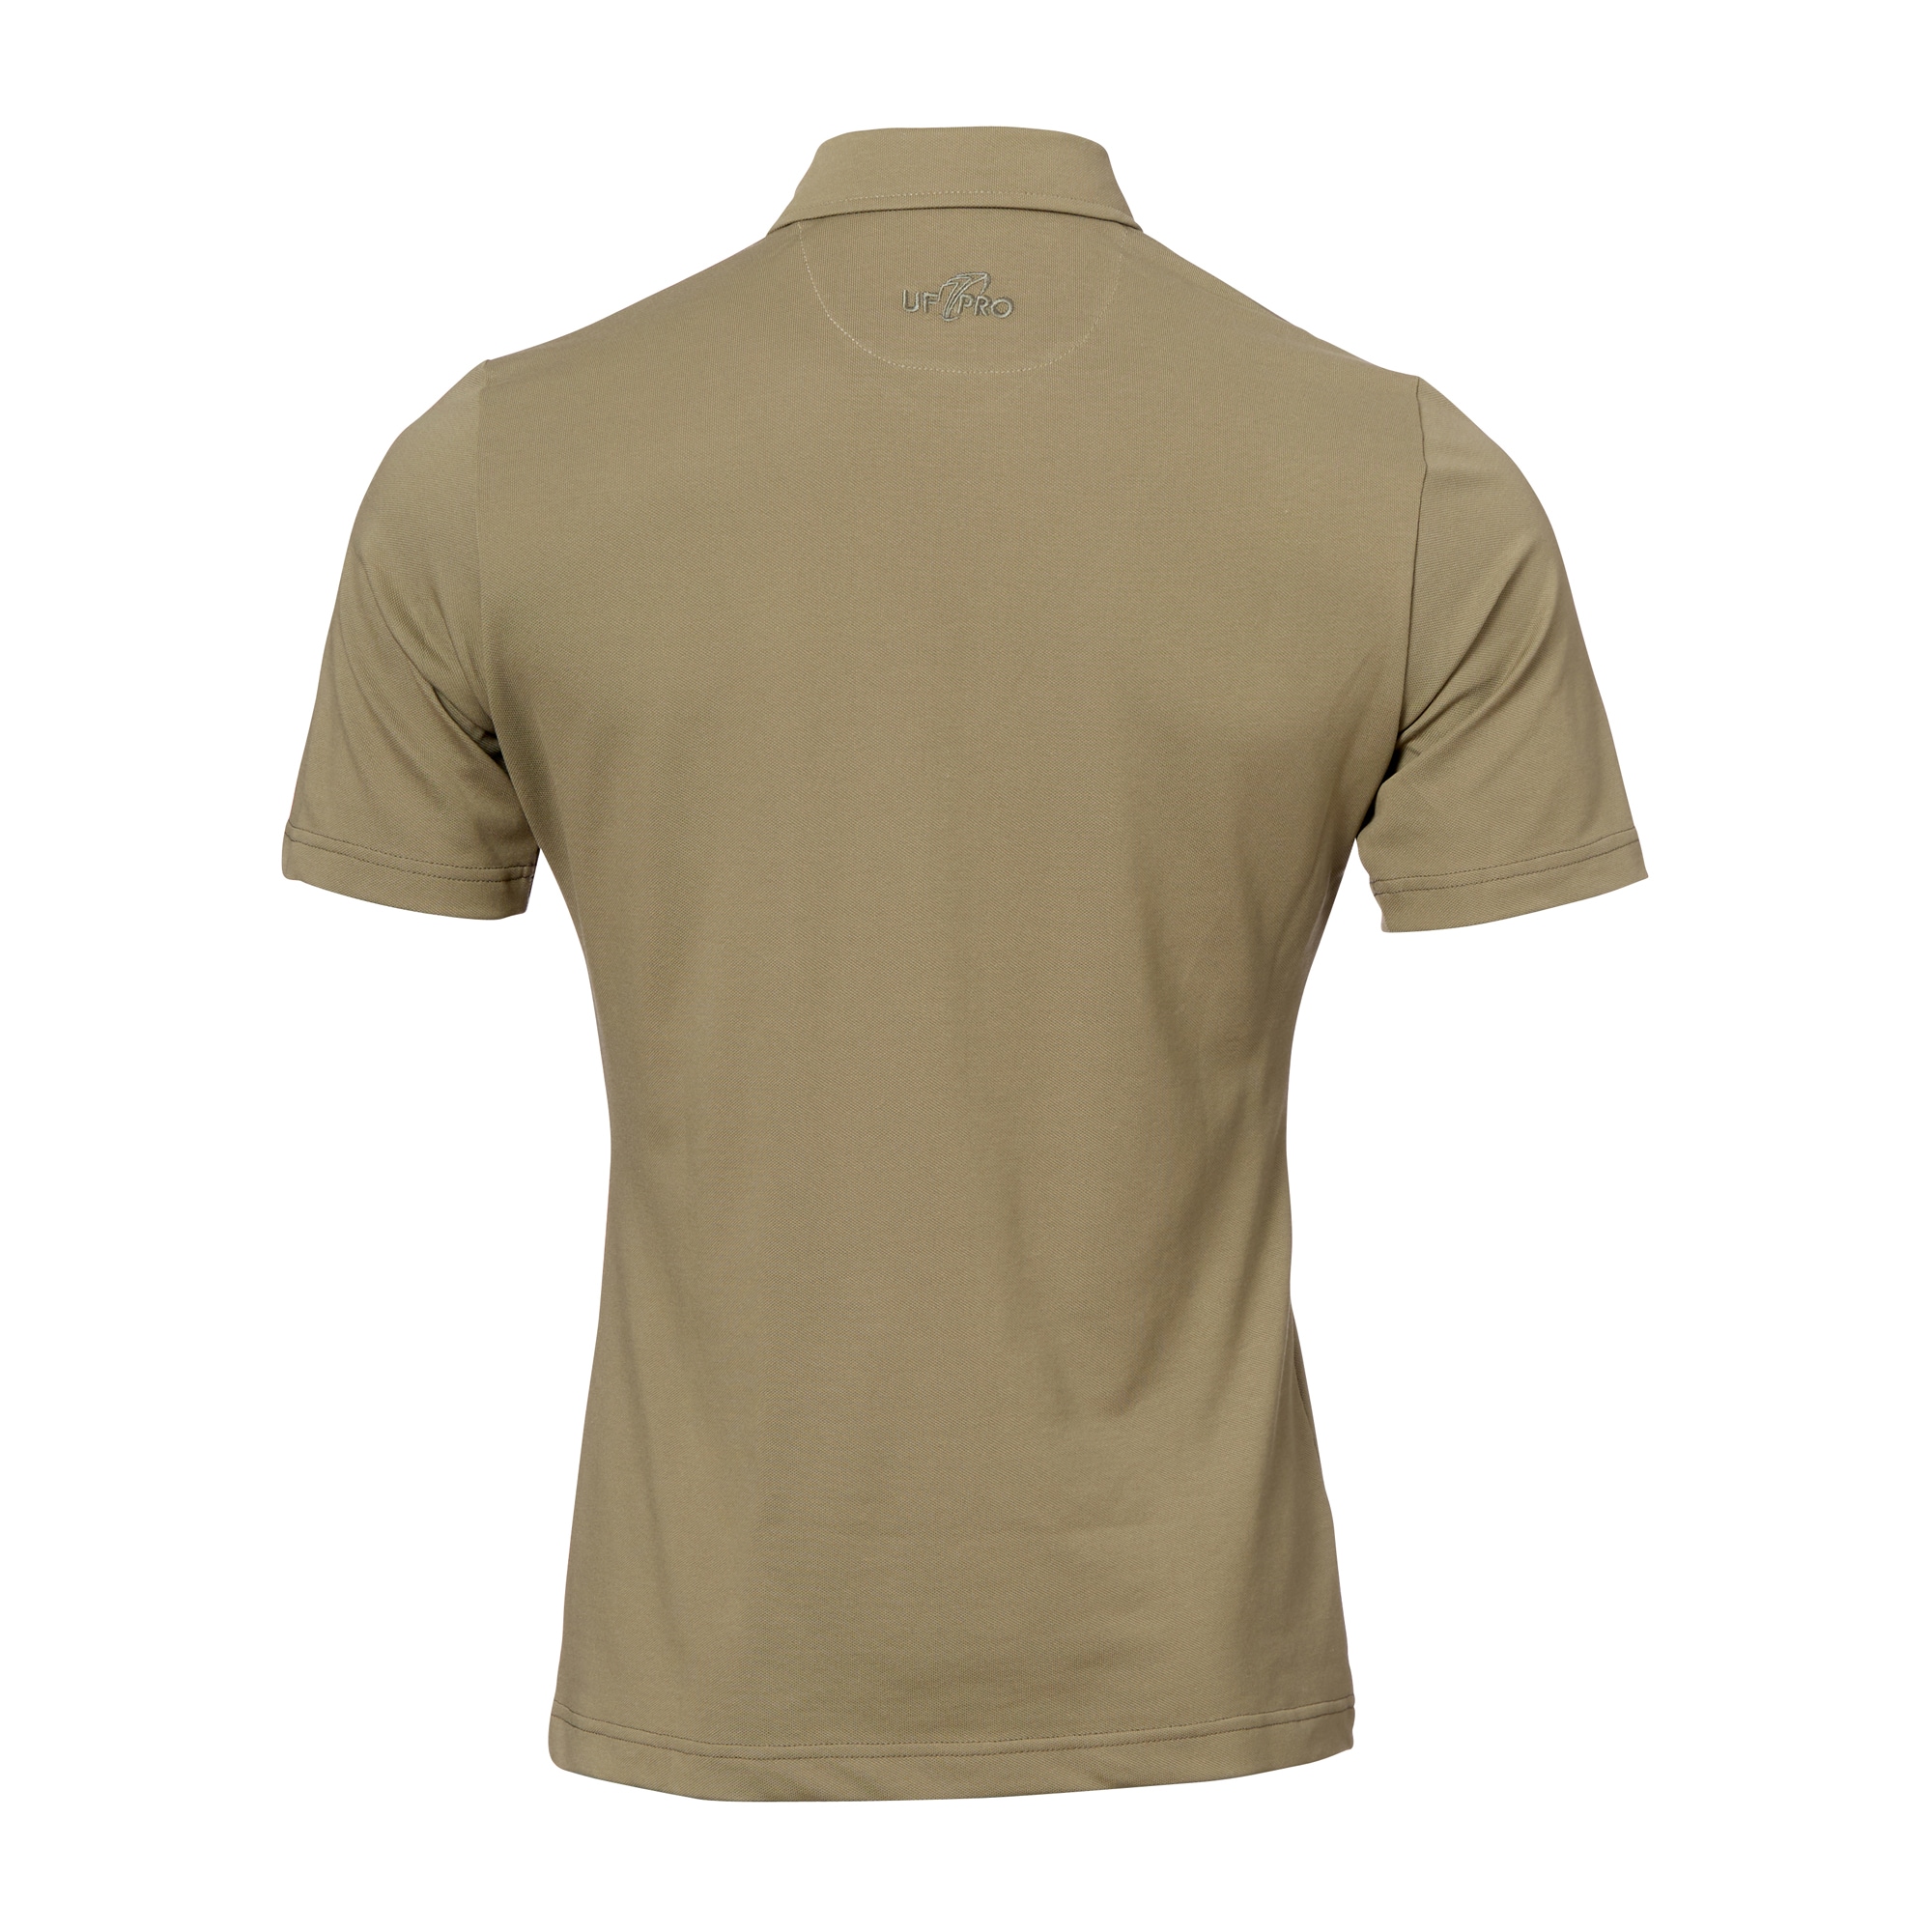 Purchase the UF Pro Polo Shirt Urban desert gray by ASMC